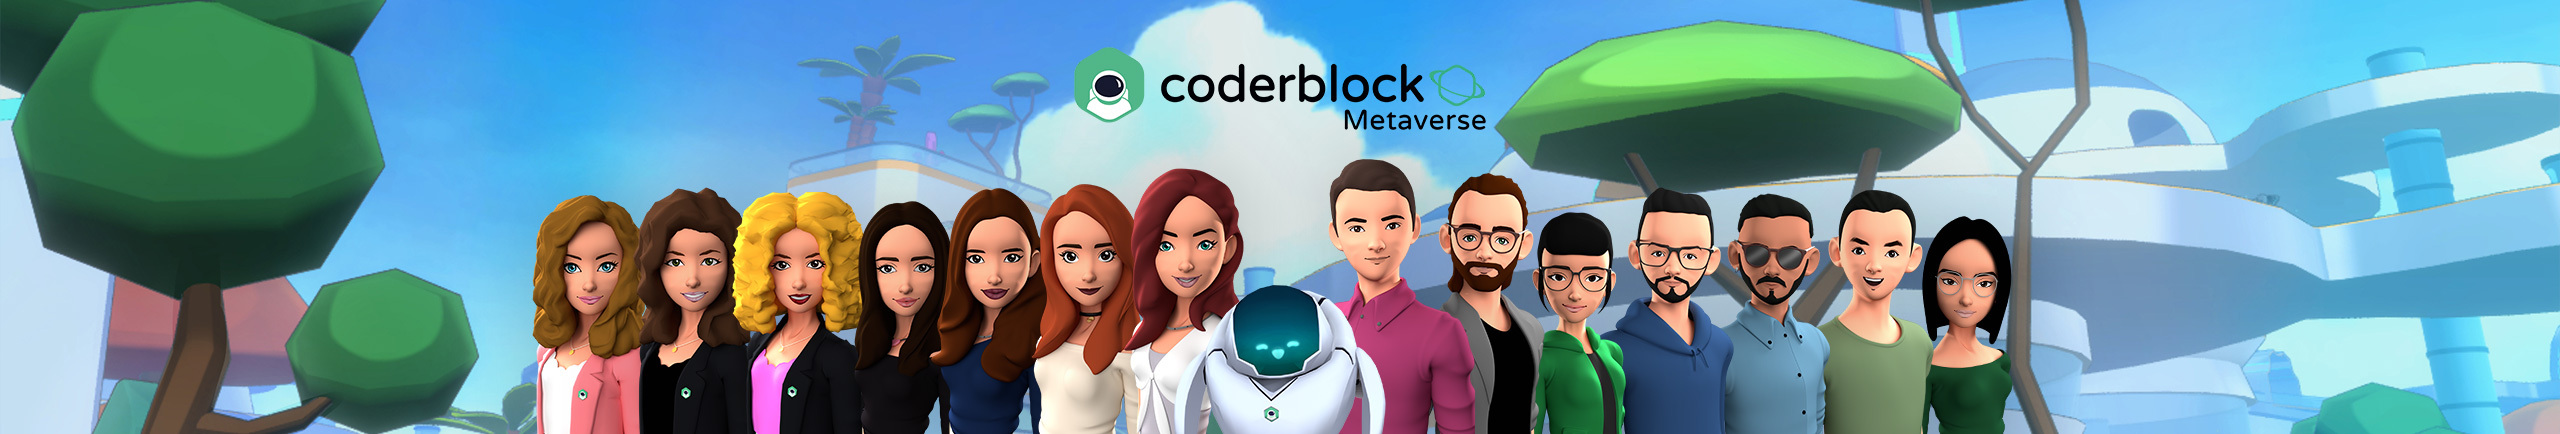 Coderblock banner